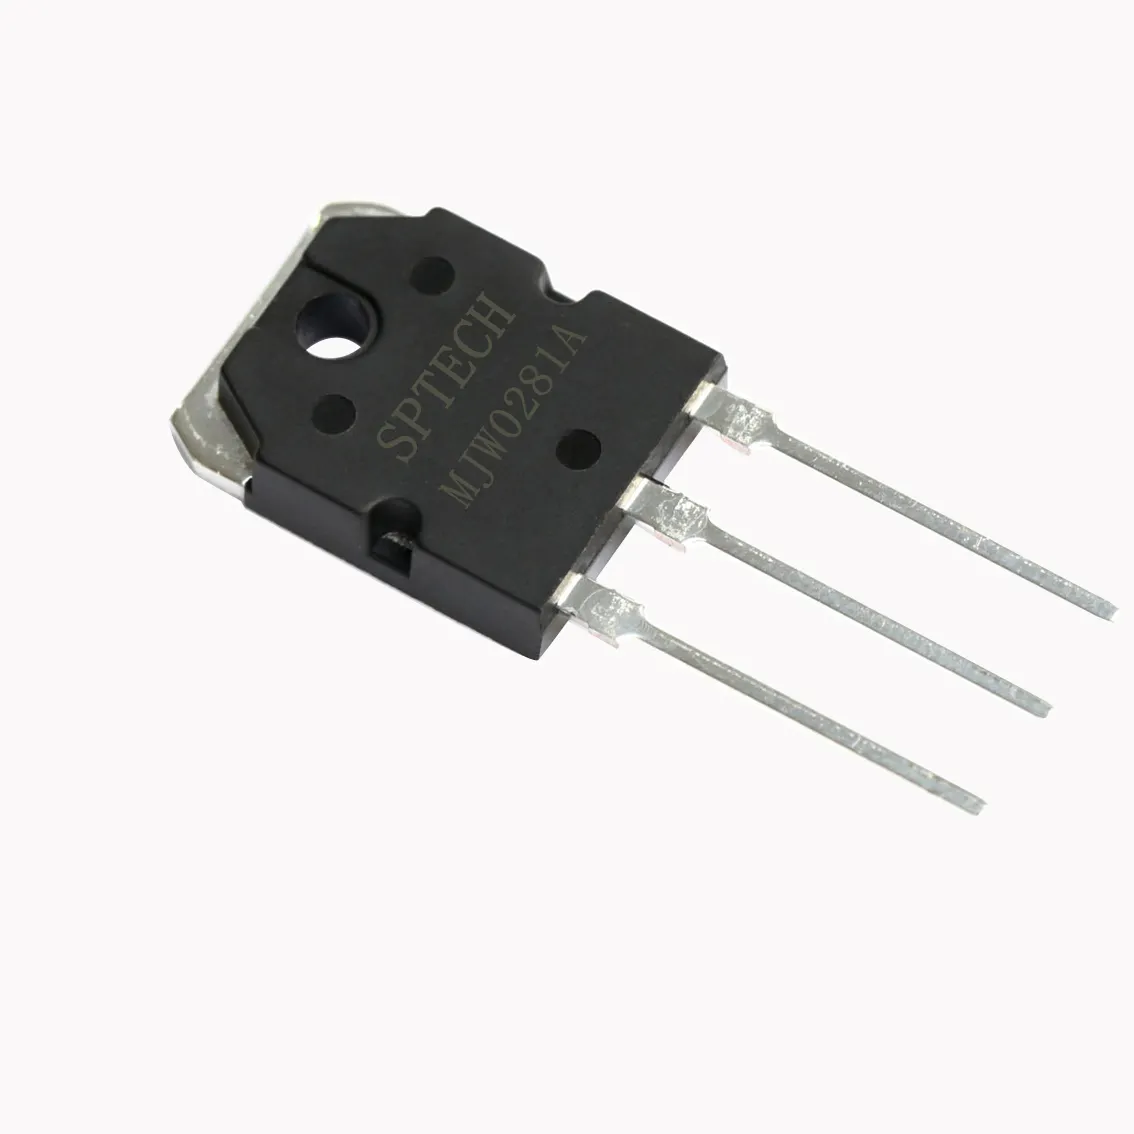 Mjw0281a güç amplifikatörü ses özel transistör sptech transistör fabrika nokta NPN transistör tasarım yüksek güç ses